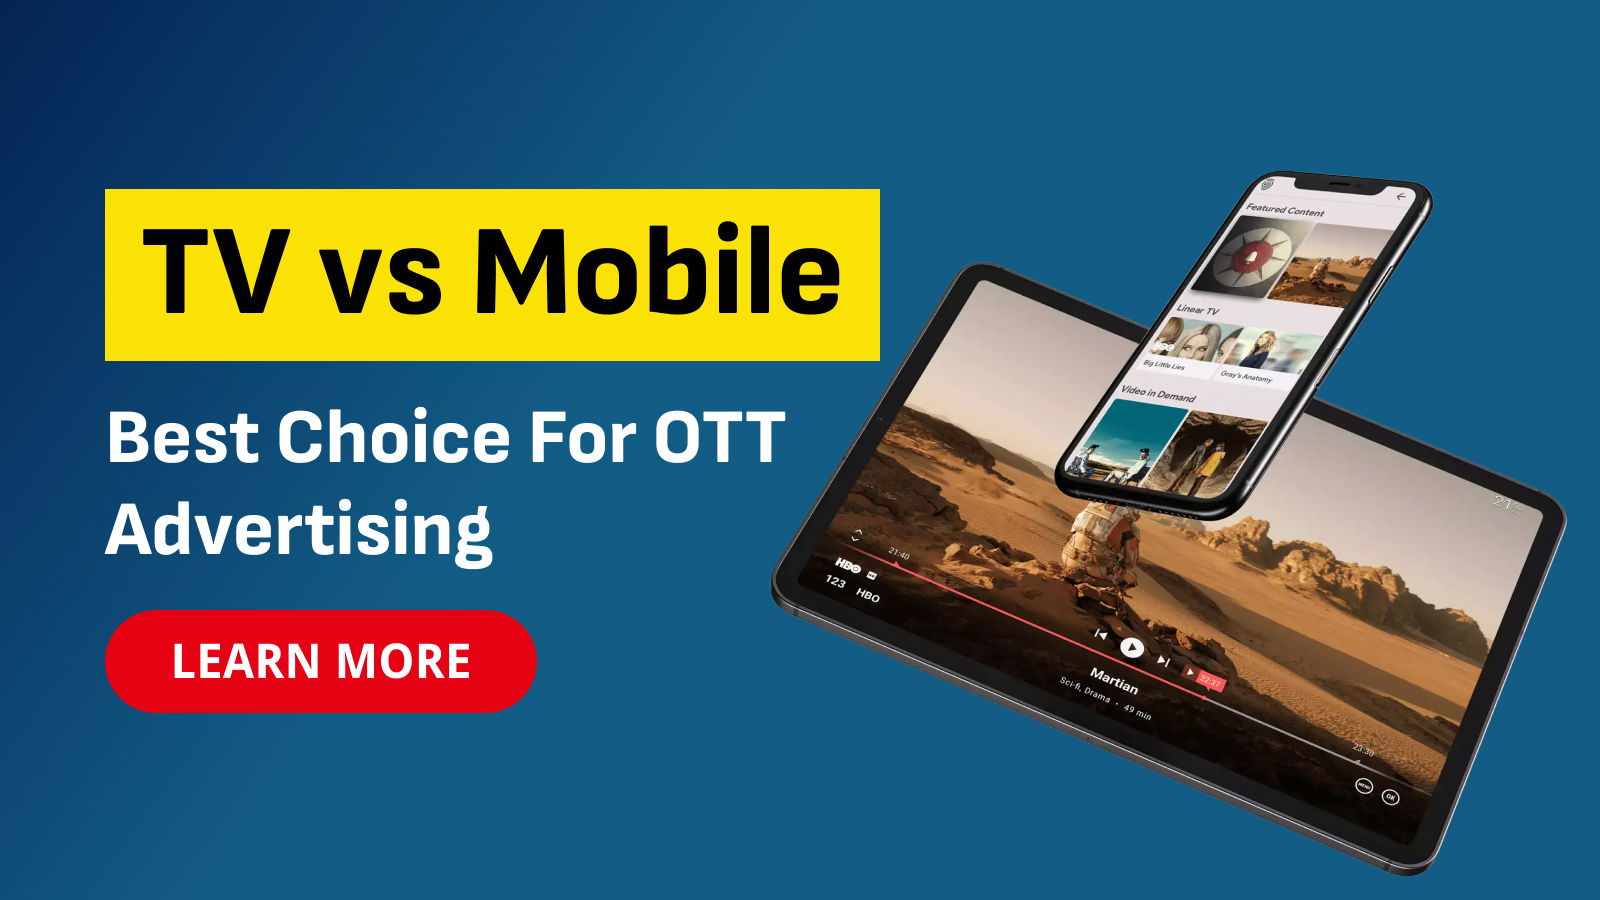 TV vs Mobile – What Should OTT Advertisers Focus on?